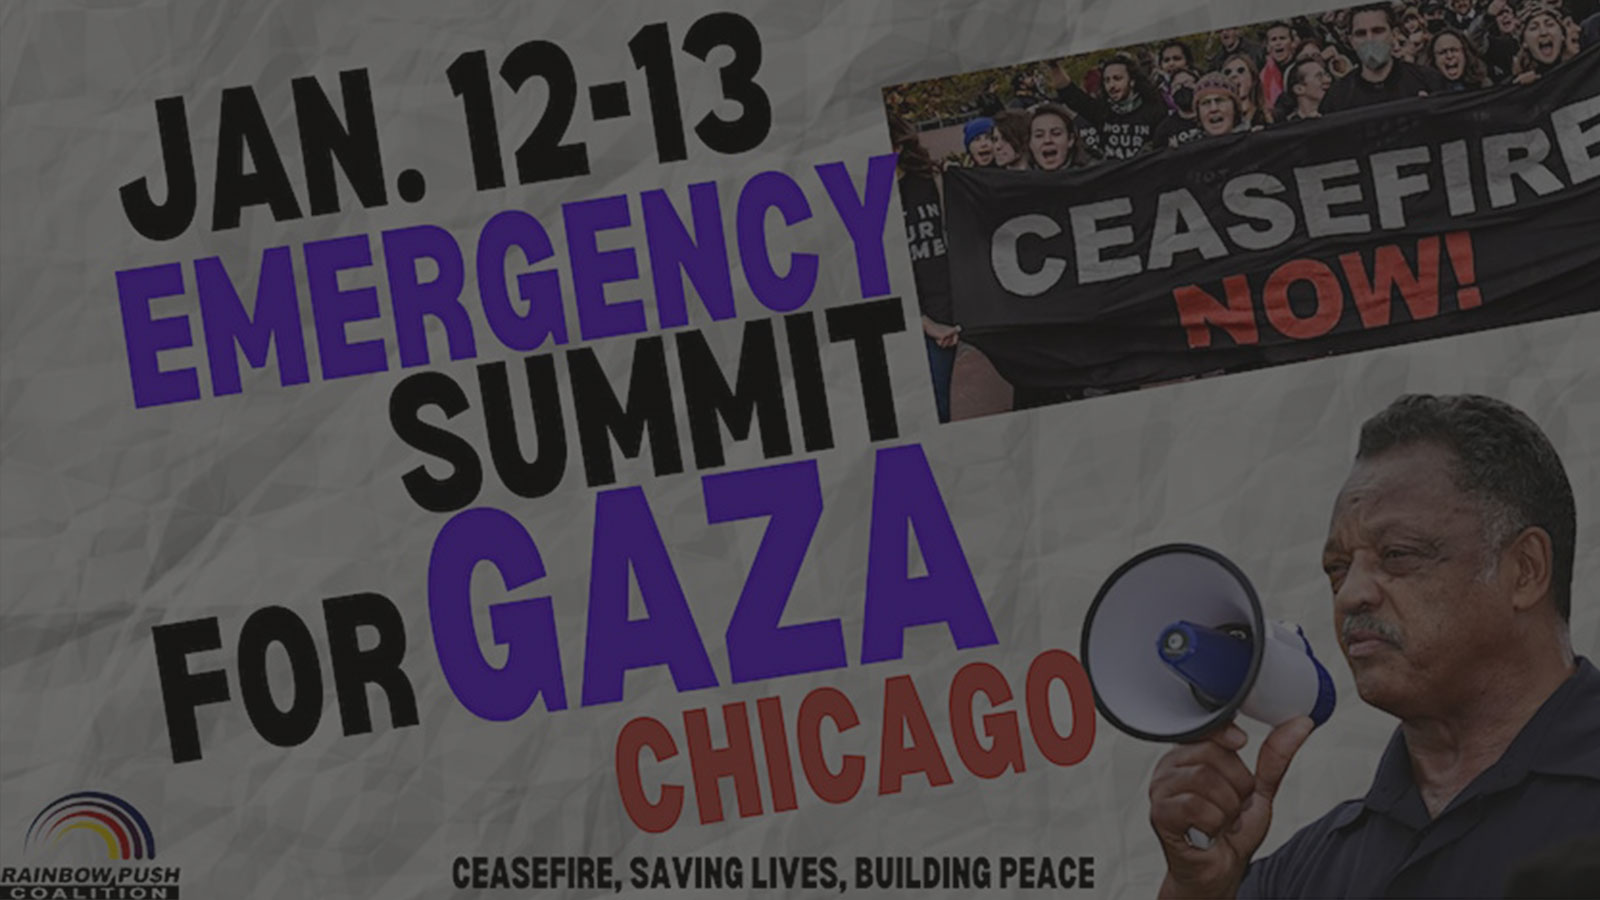 Jesse Jackson to lead emergency summit in Chicago to address escalating Gaza humanitarian crisis